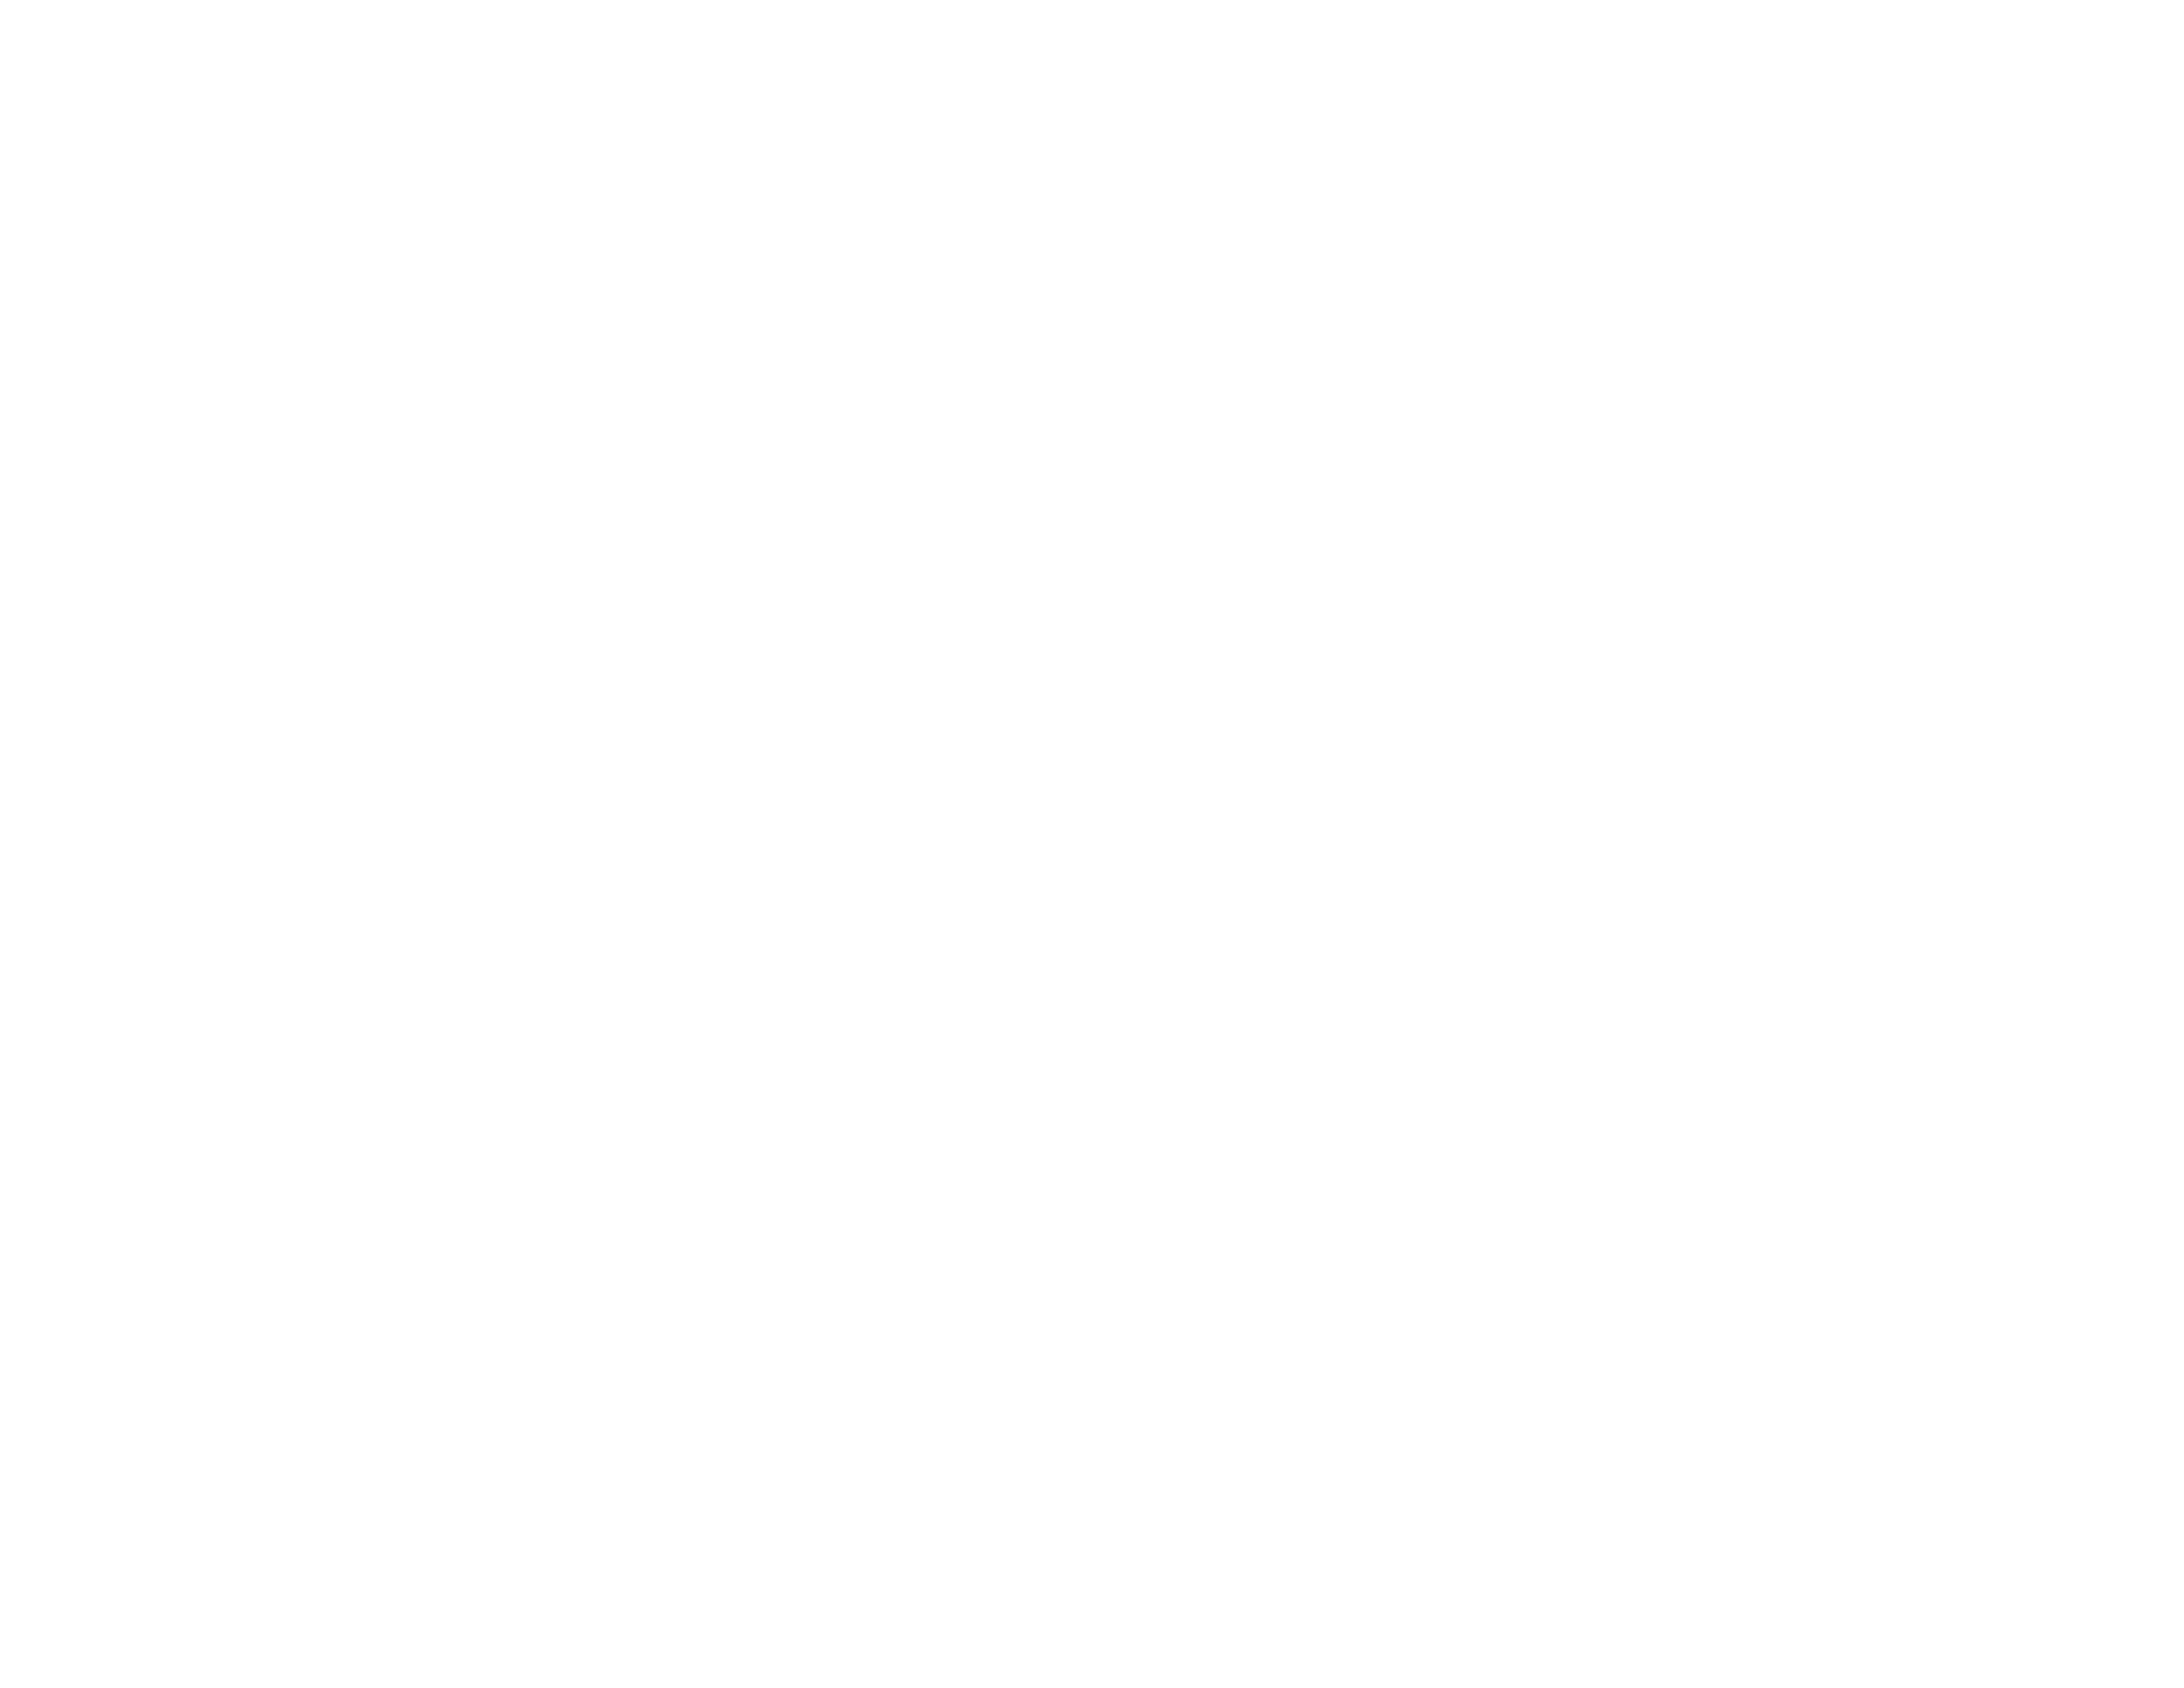 Bearded Bros. Media